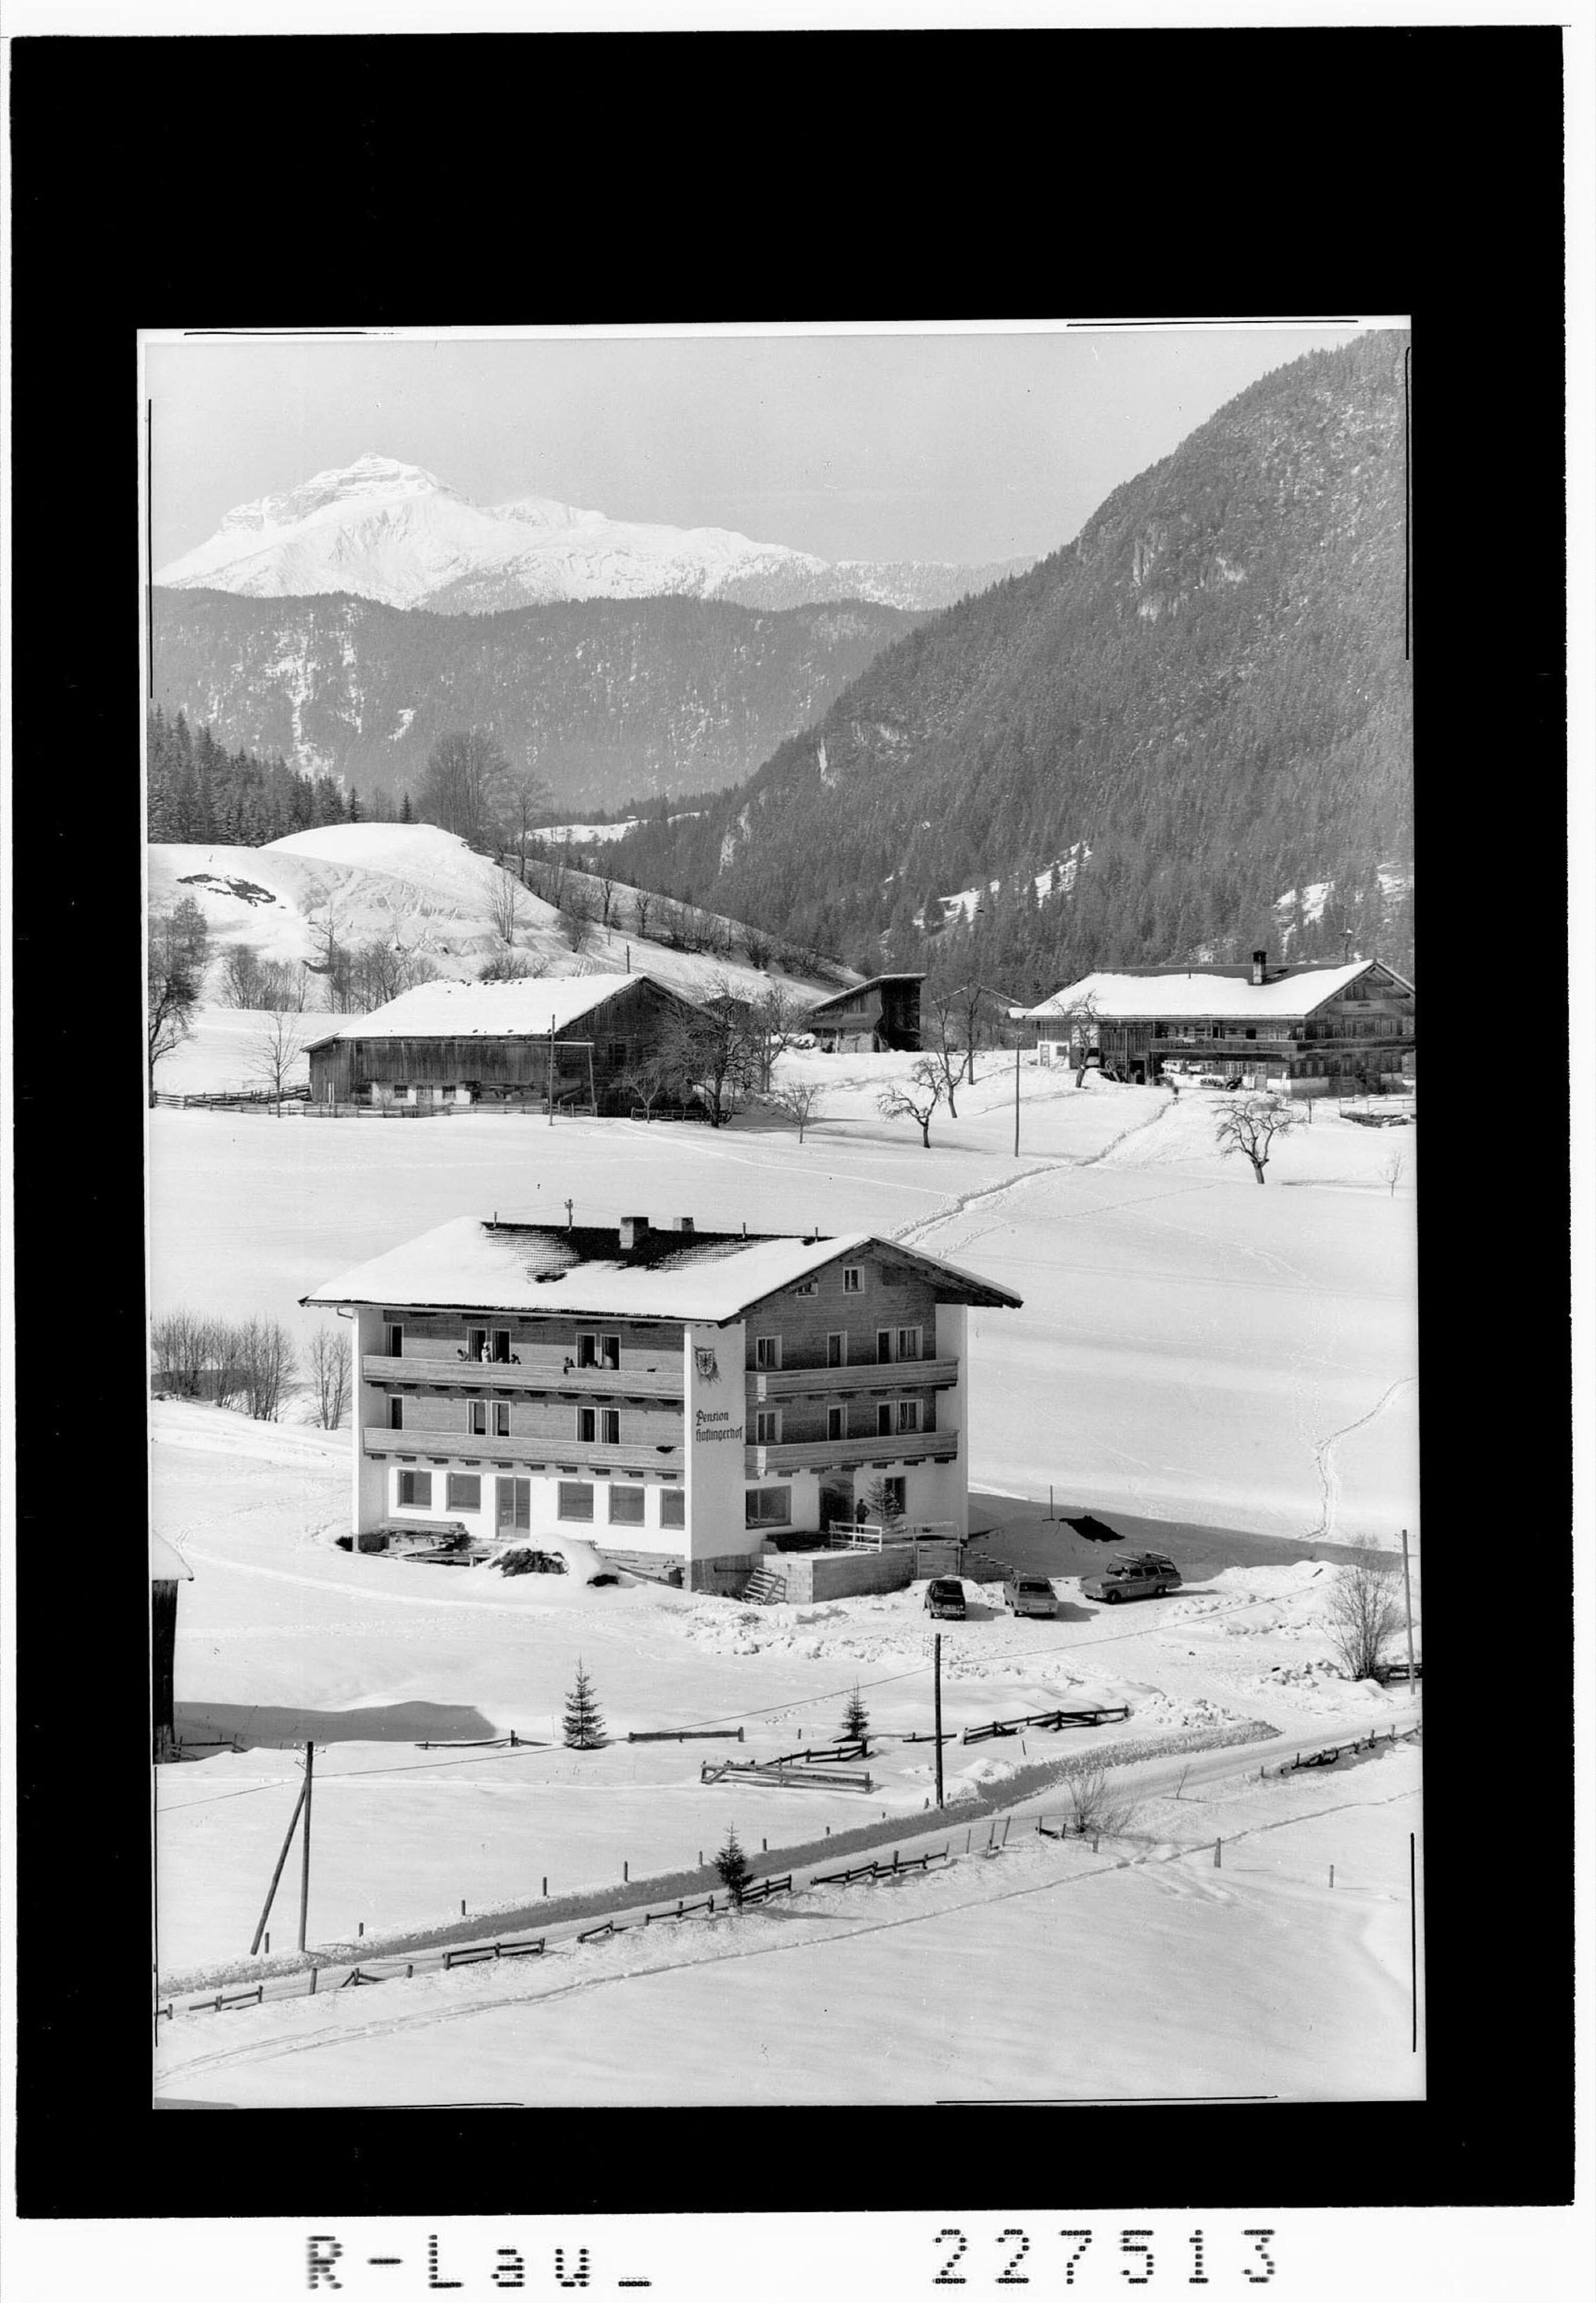 [Mühltal - Wildschönau / Gasthaus Haflingerhof gegen Guffertspitze / Tirol]></div>


    <hr>
    <div class=